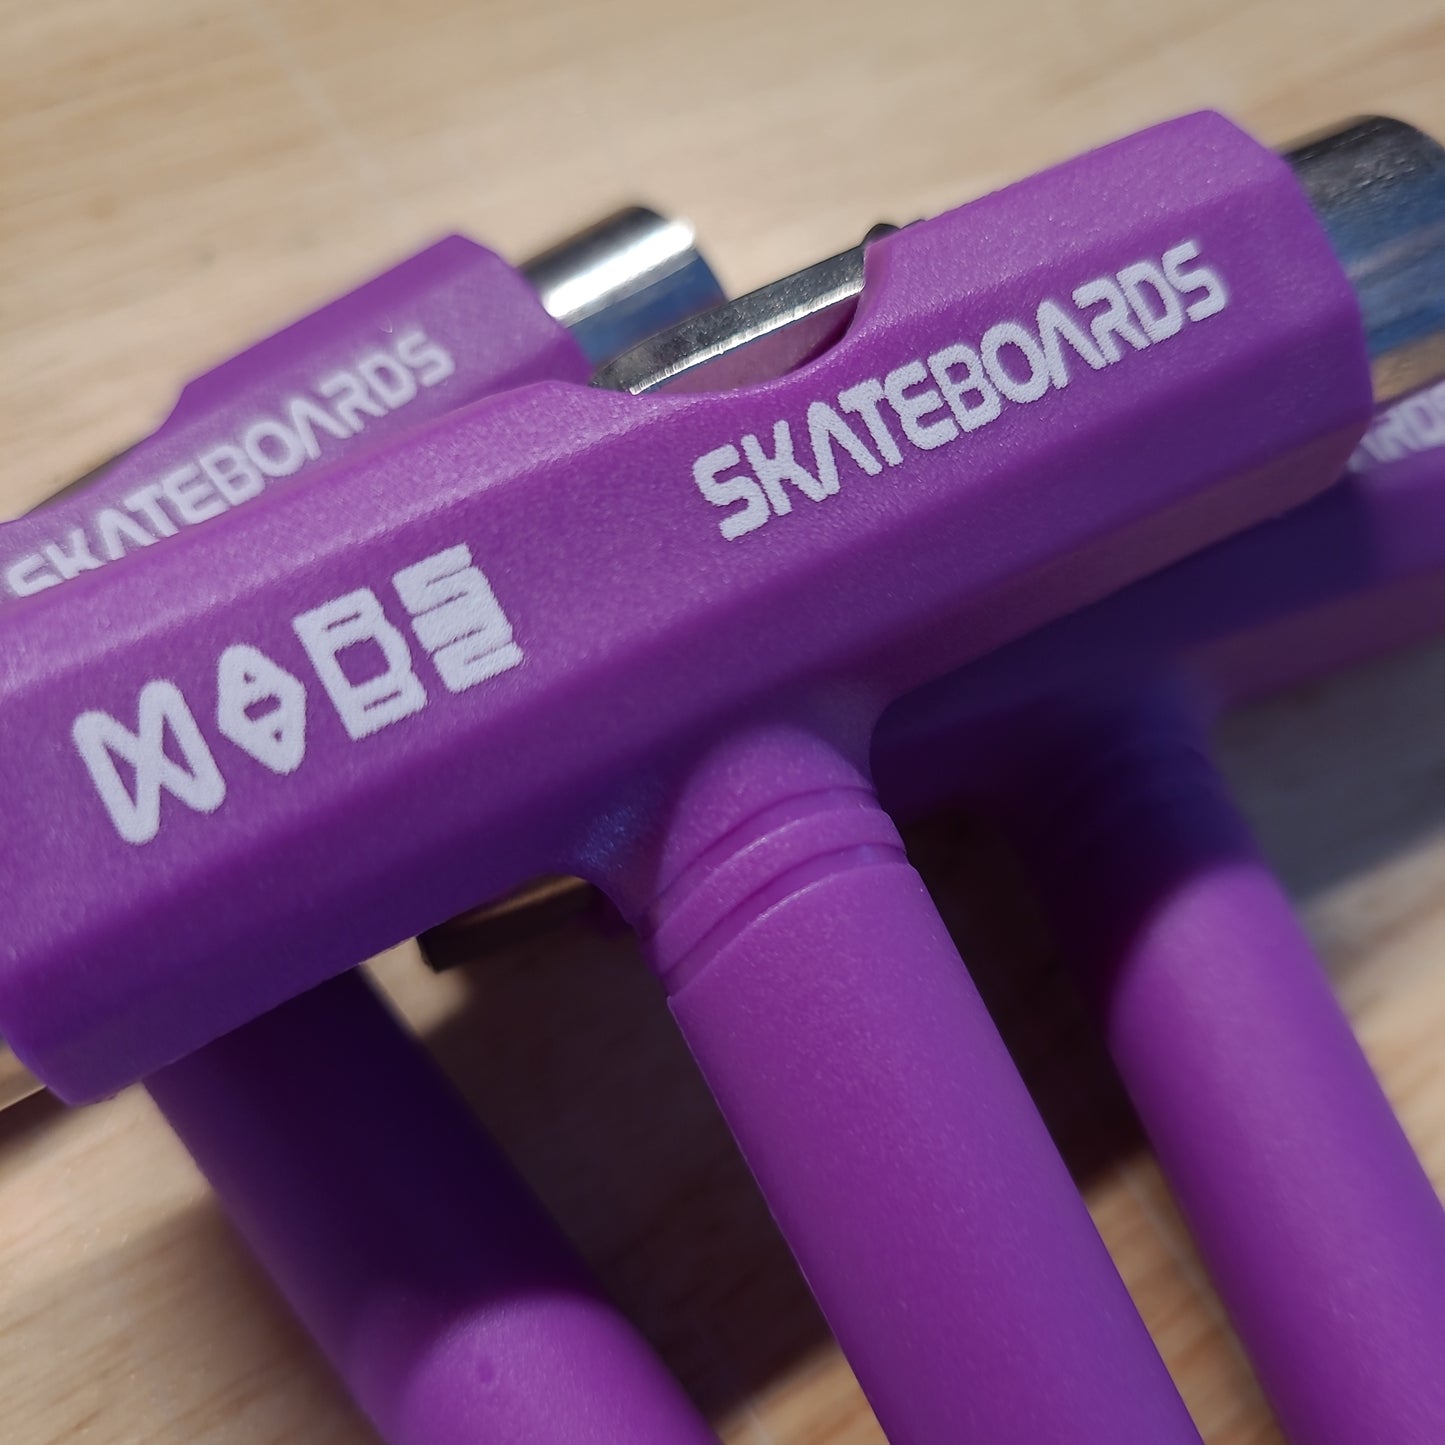 M.A.R.S - Purple Skate Tool